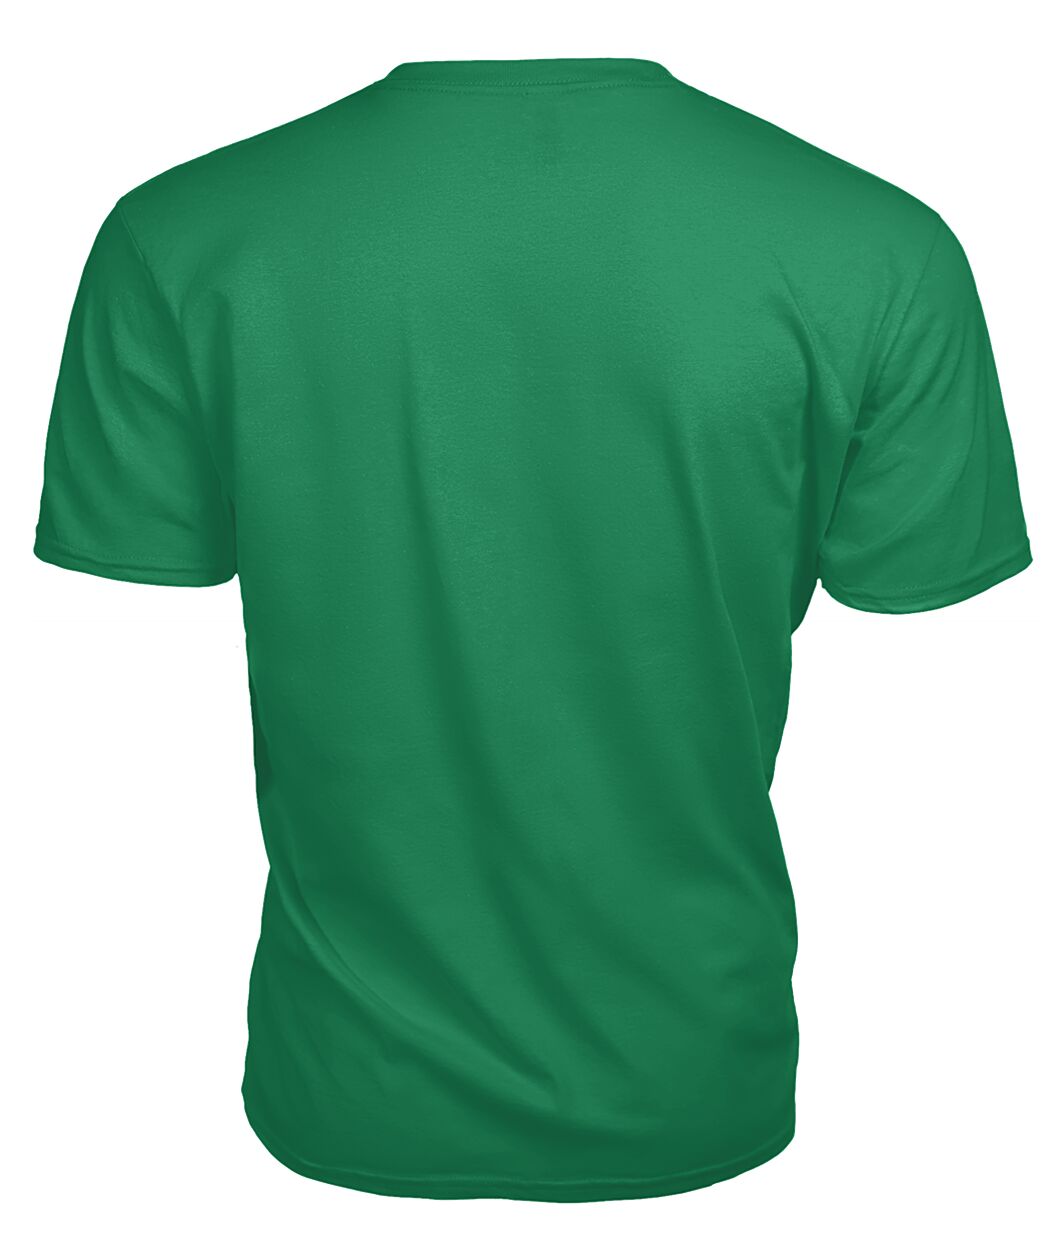 Wedderburn Family Tartan - 2D T-shirt